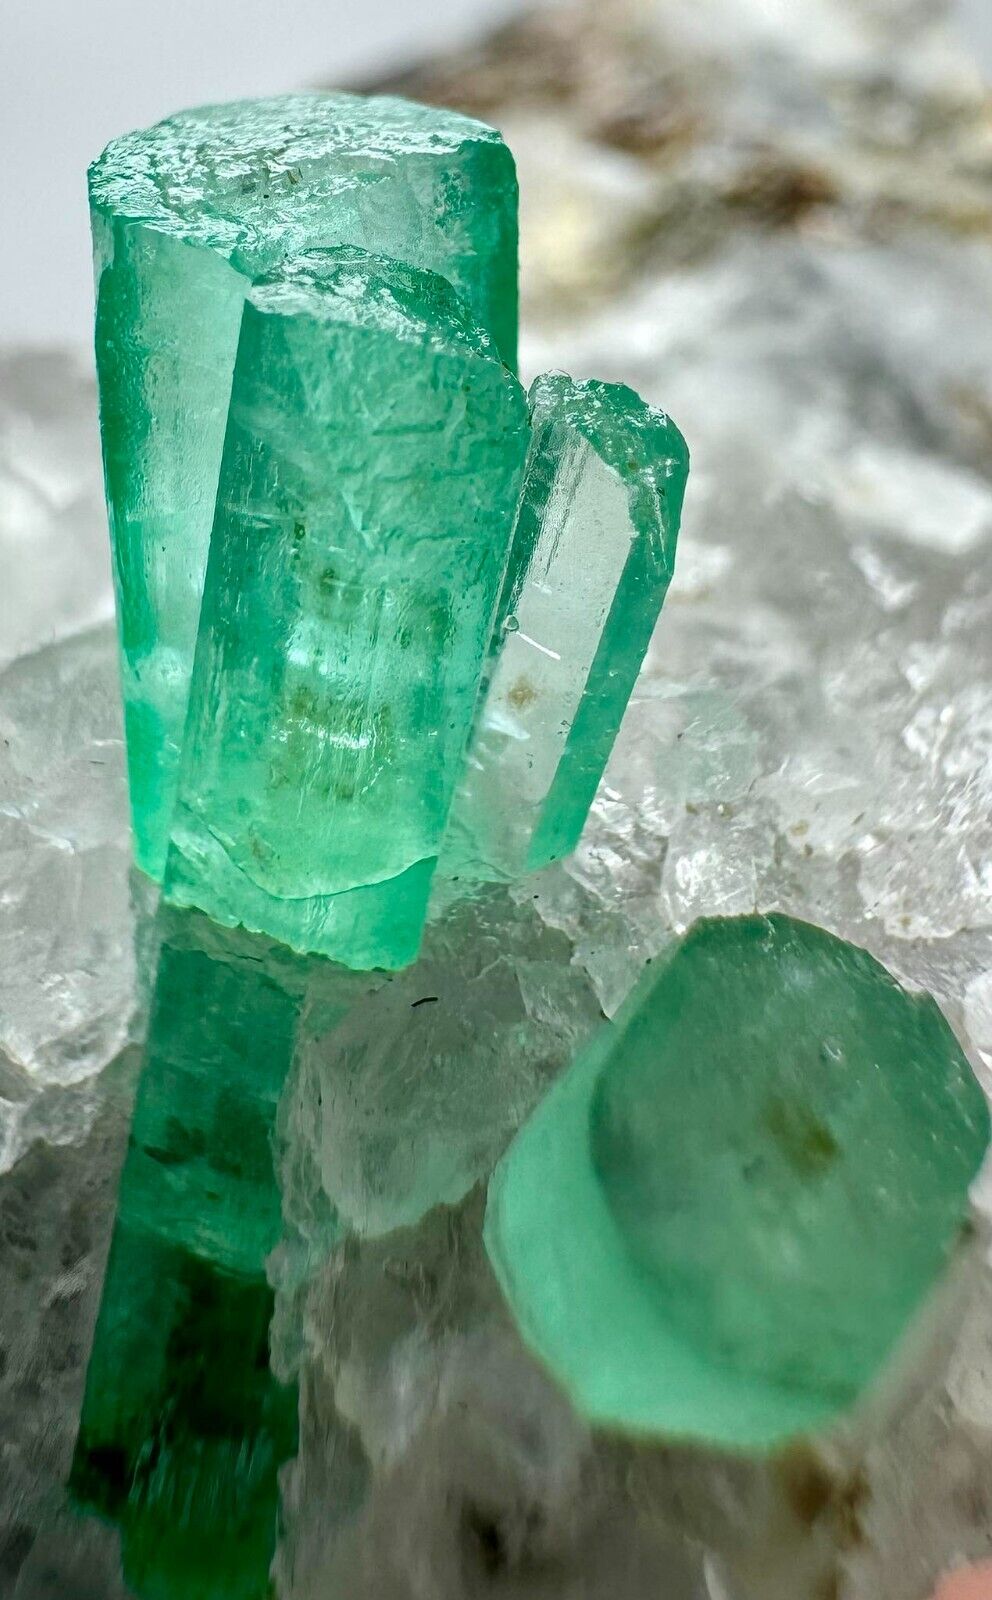 346 Ultra Rare Full Terminated Transparent Emerald Crystals On Matrix @PAK